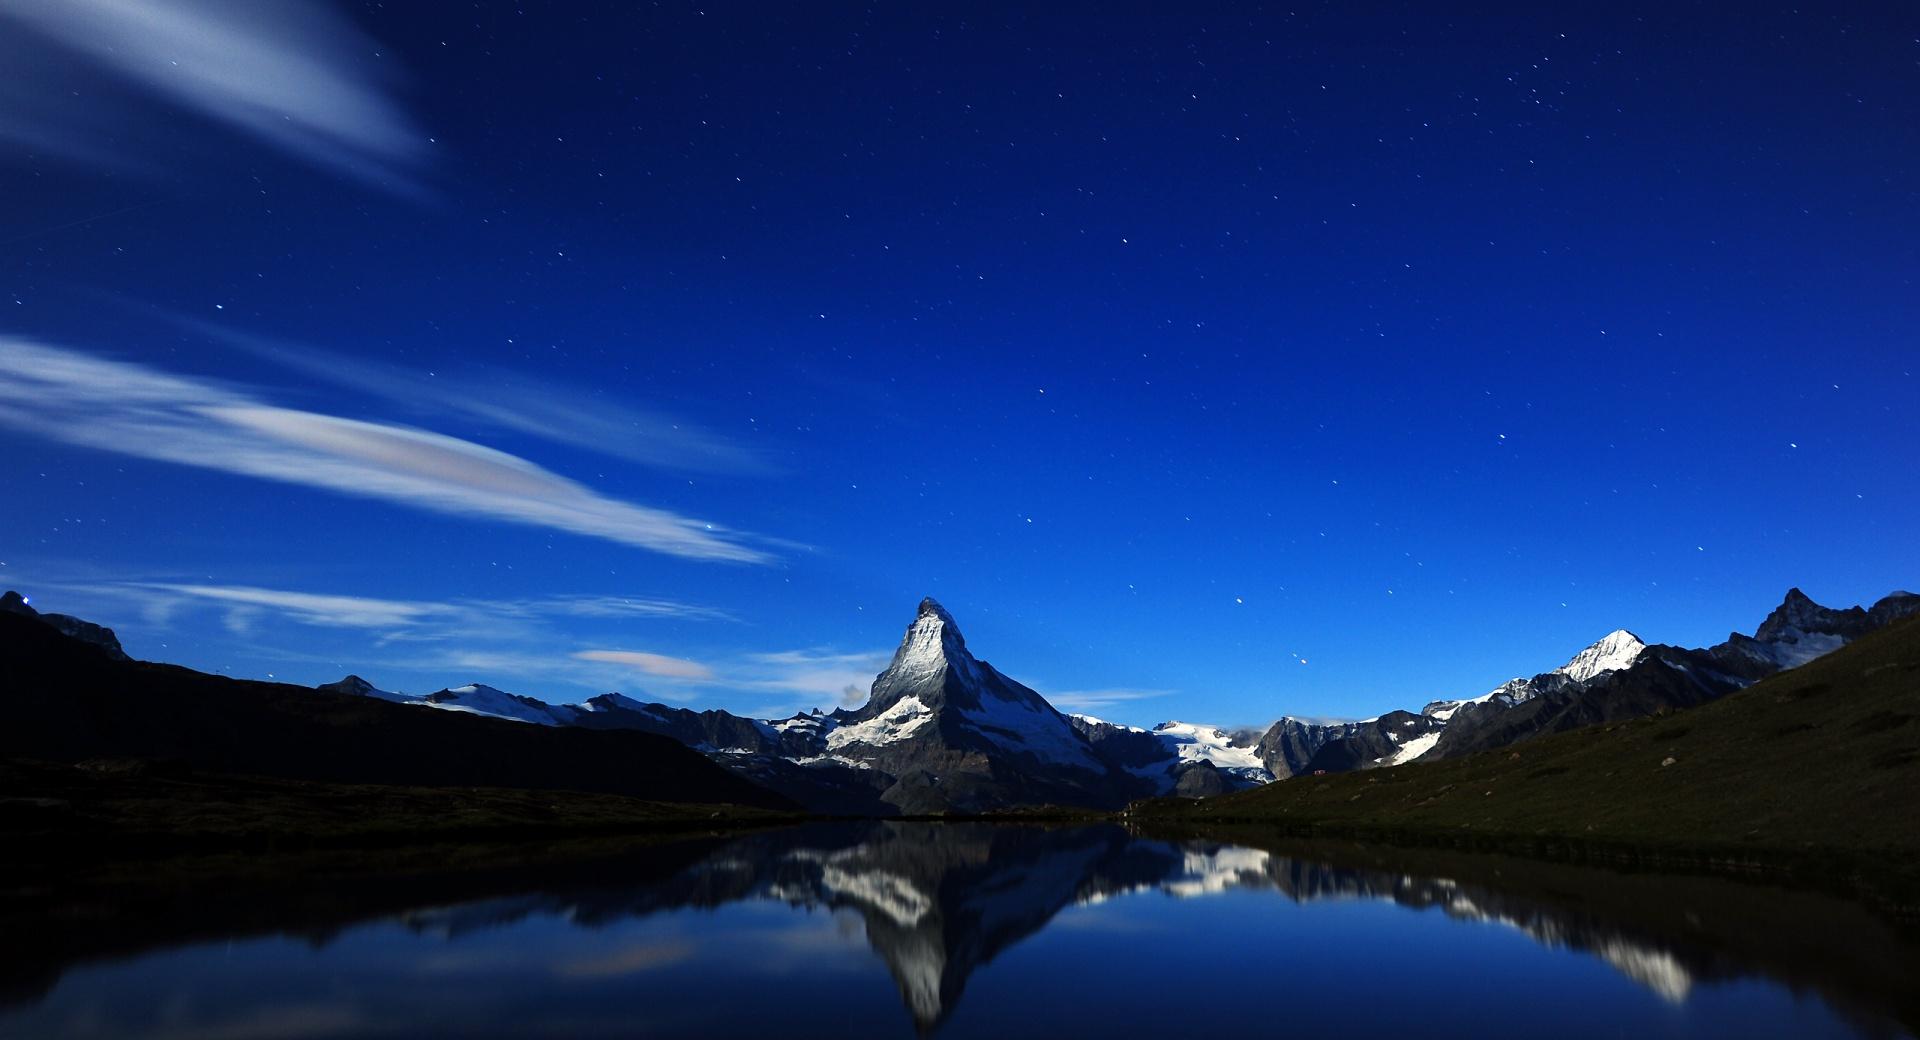 Matterhorn At Night at 1024 x 1024 iPad size wallpapers HD quality